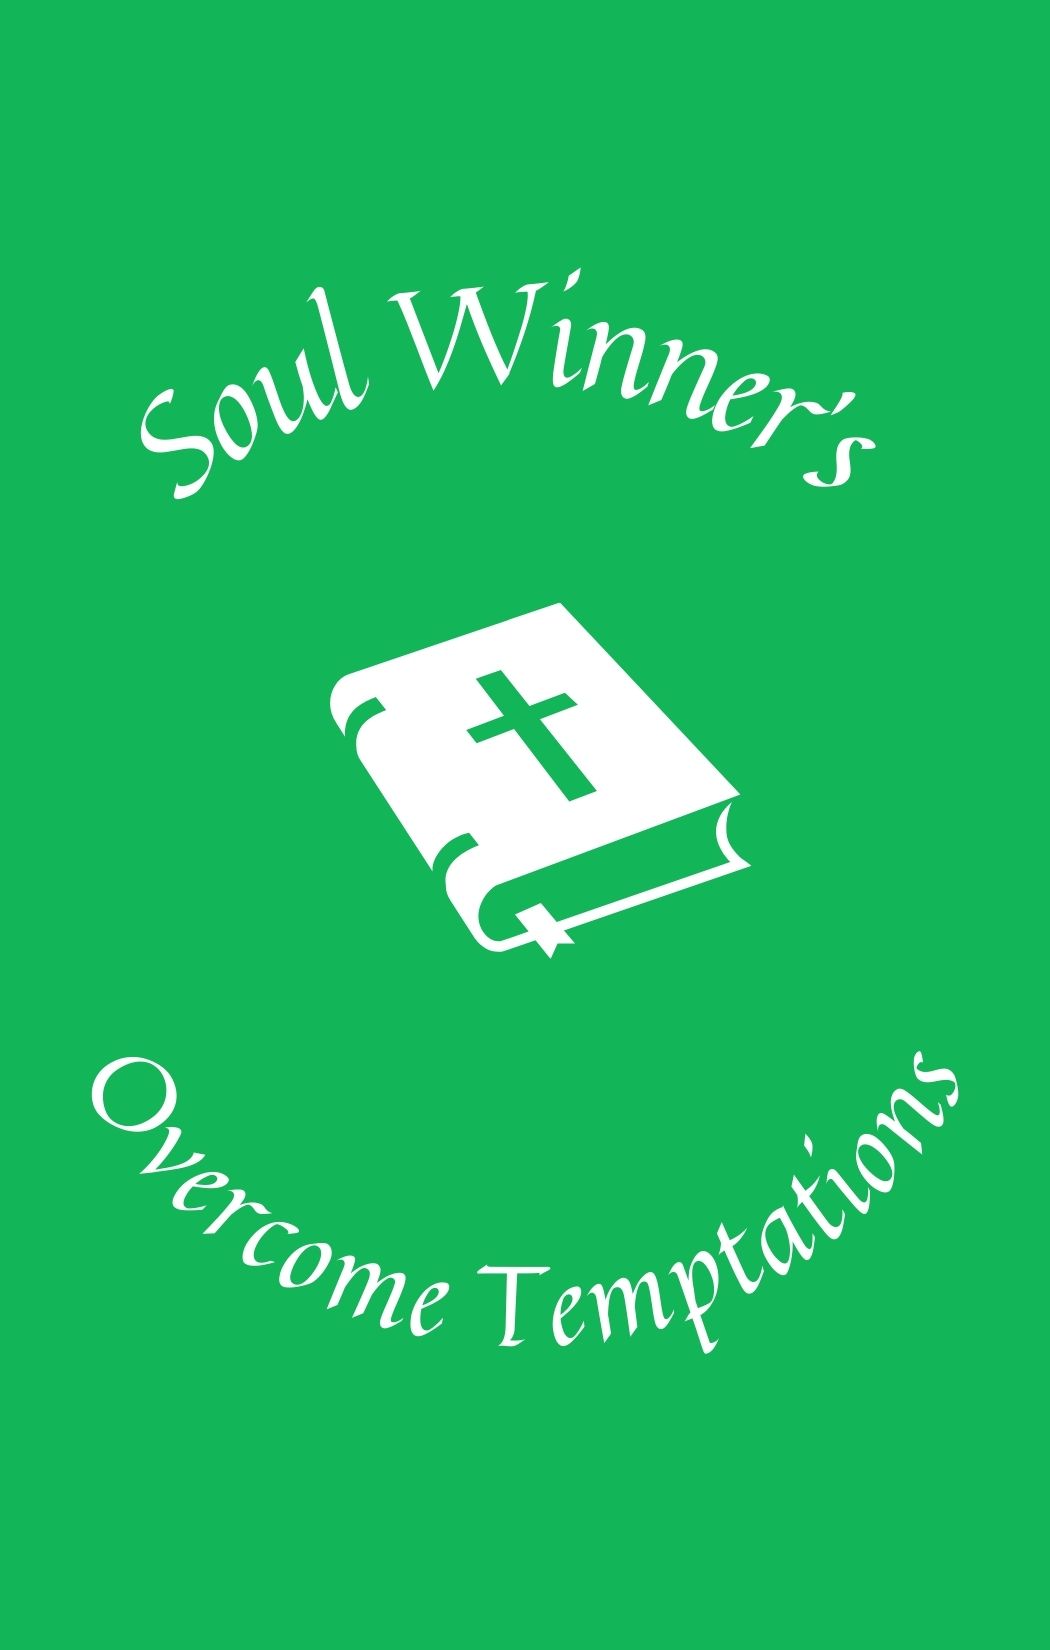 soul winner's overcome temptations book cover image